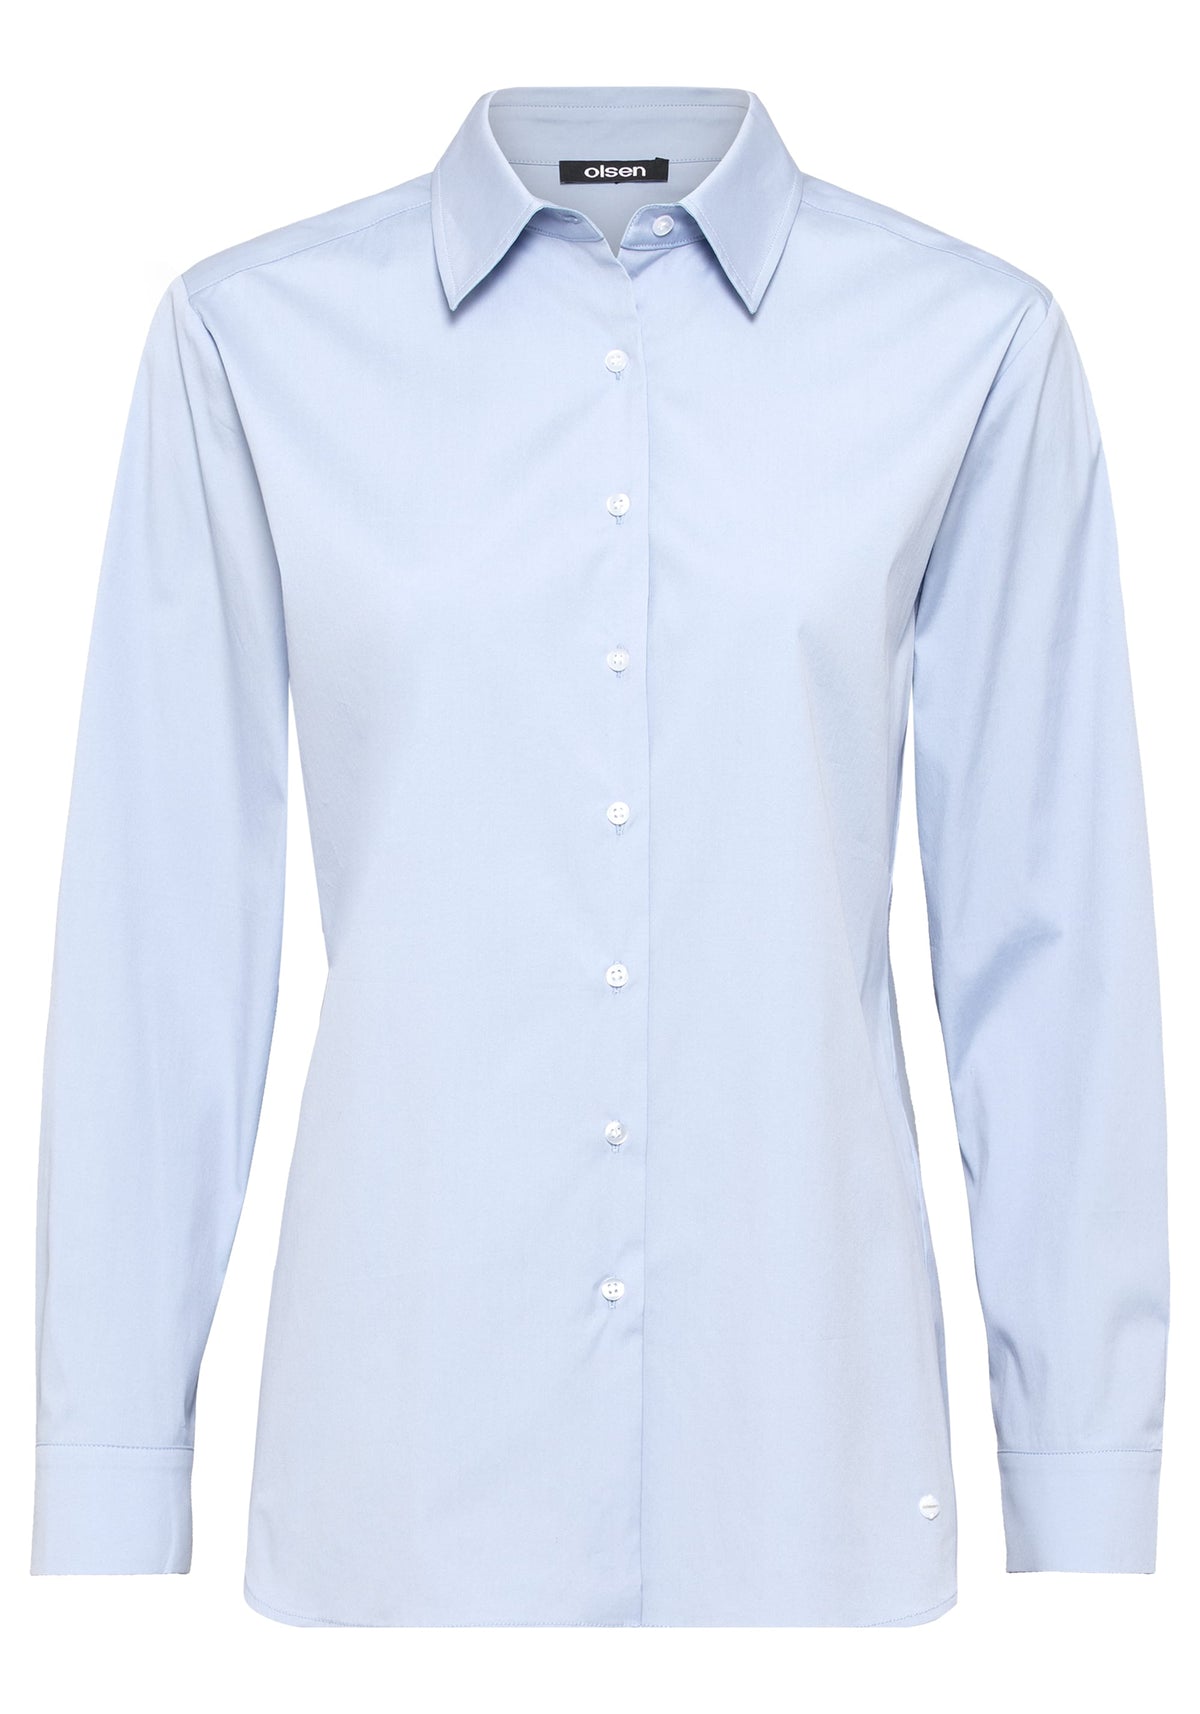 Cotton Blend Long Sleeve Classic Shirt